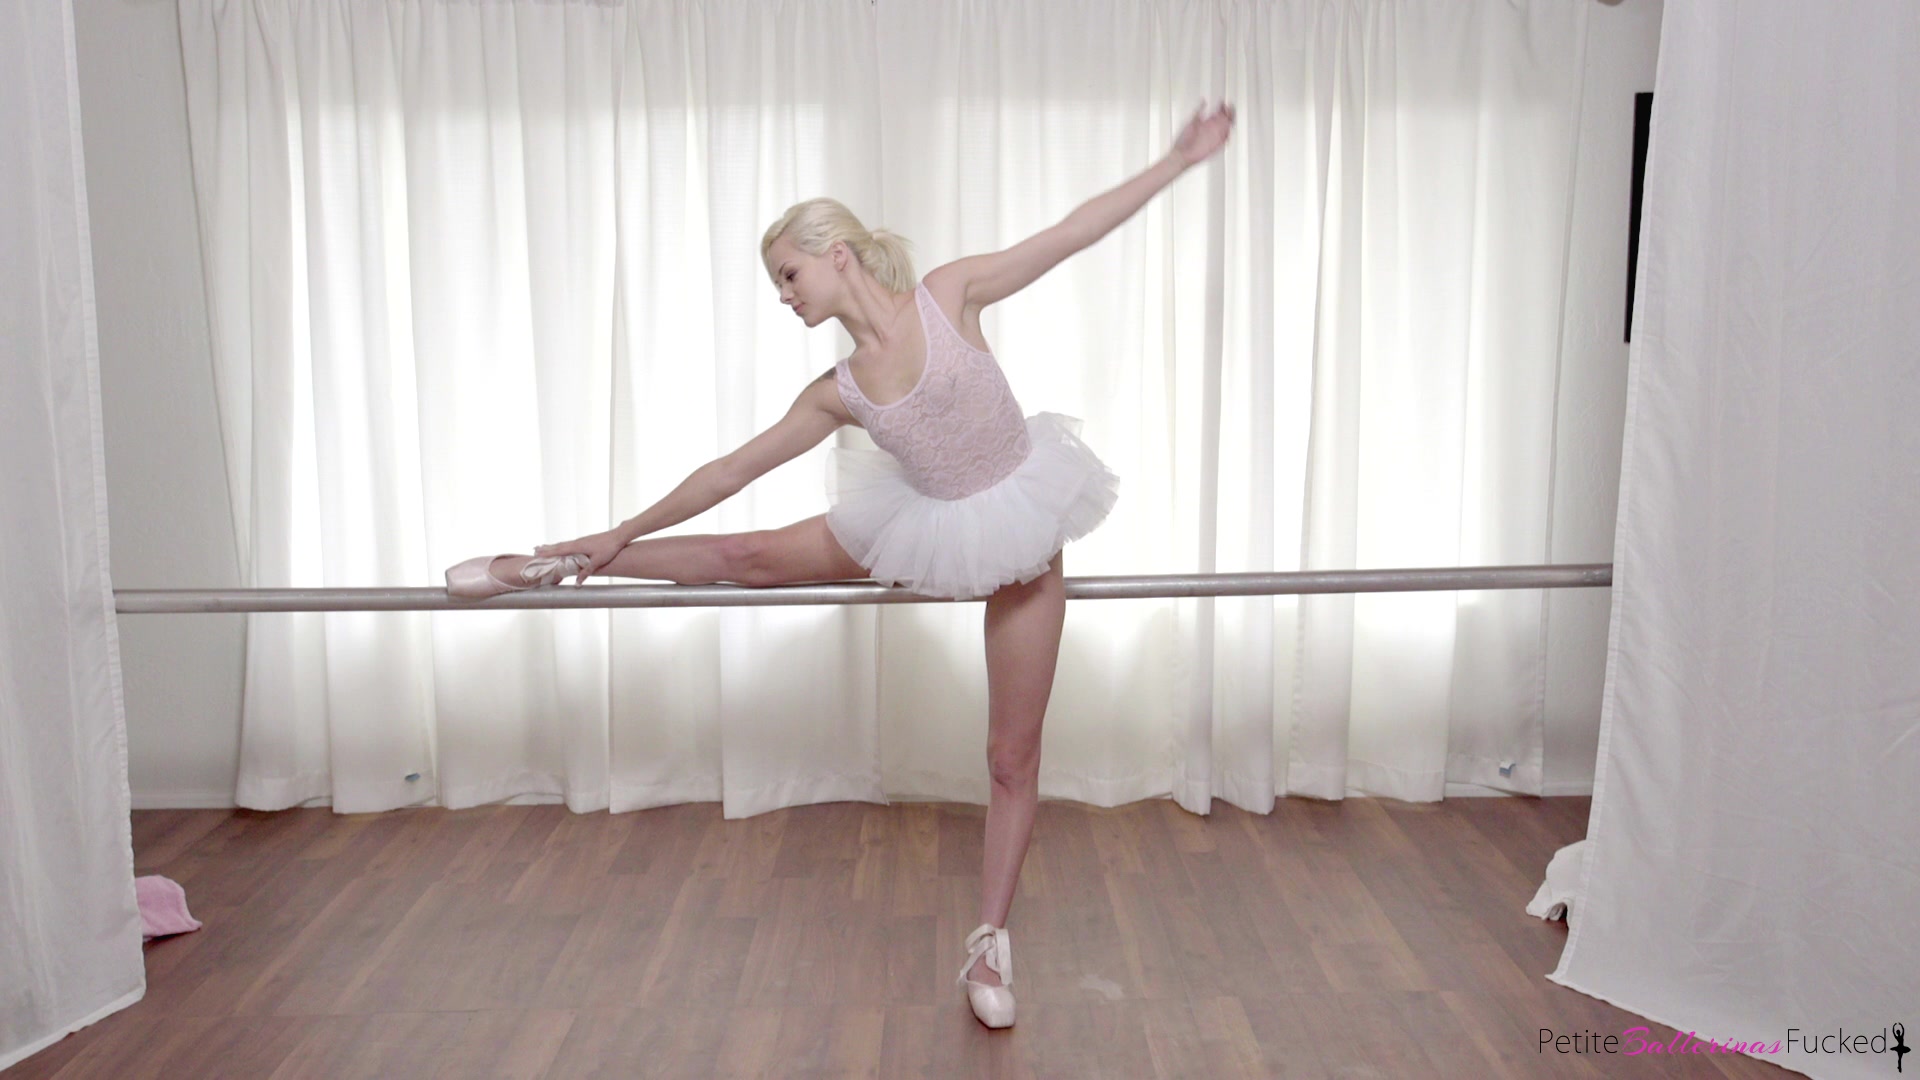 Petite Ballerinas Fucked - My Blonde Ballerina - featuring Jean. (Screenshots)